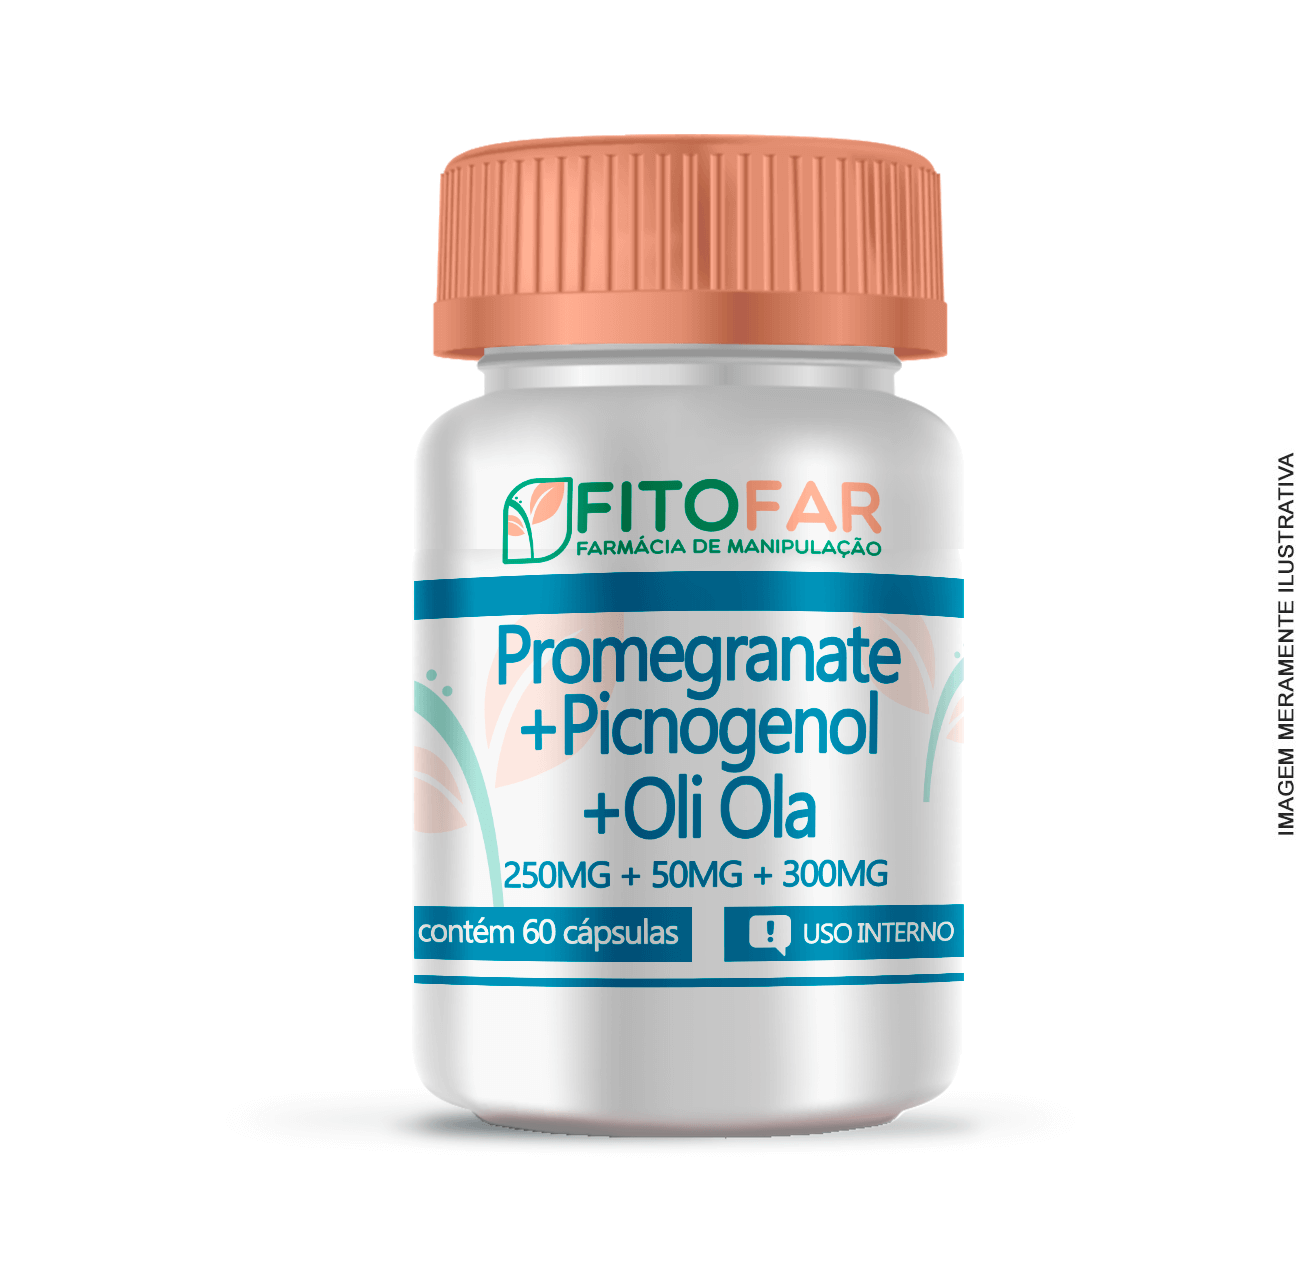 Promegranate 250MG + Picnogenol 50MG + Oli Ola 300MG